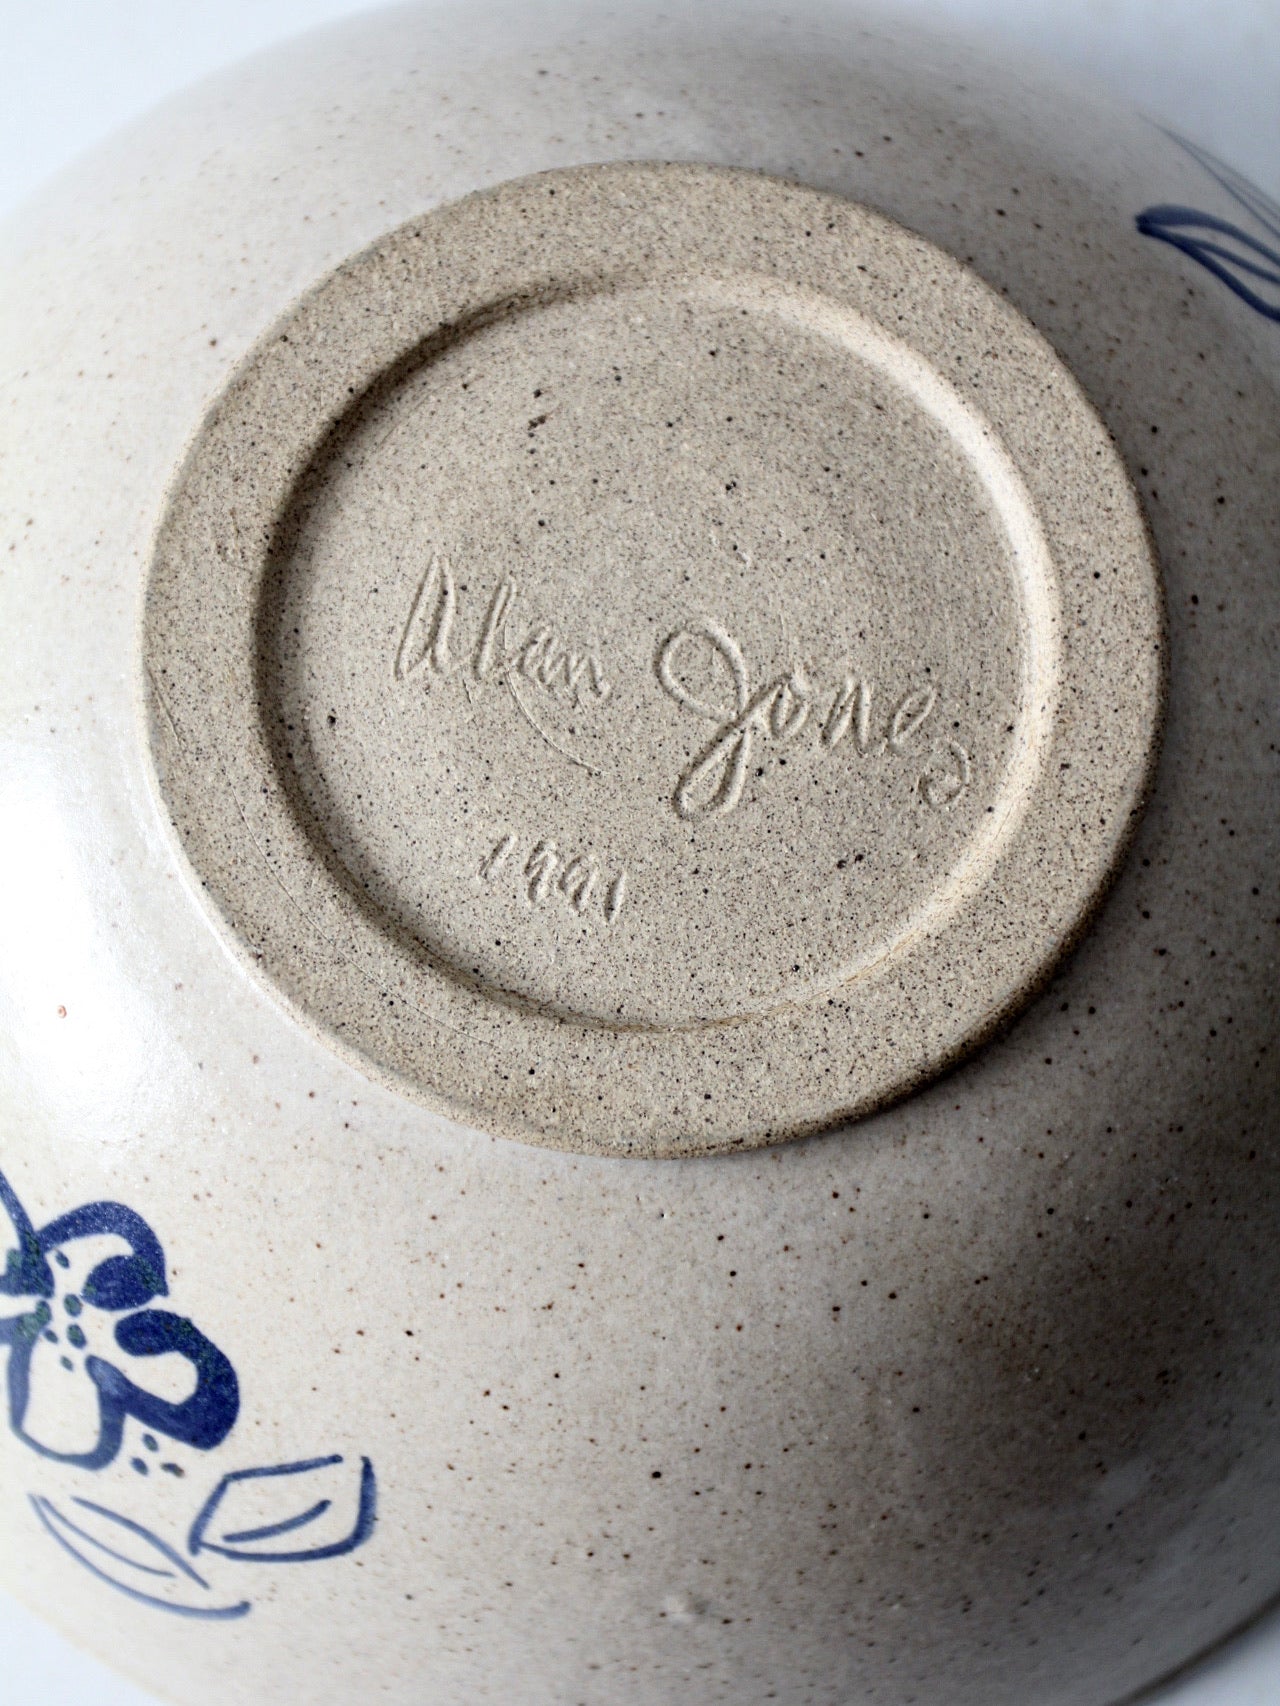 Alan Jones studio pottery bowl ca 1991